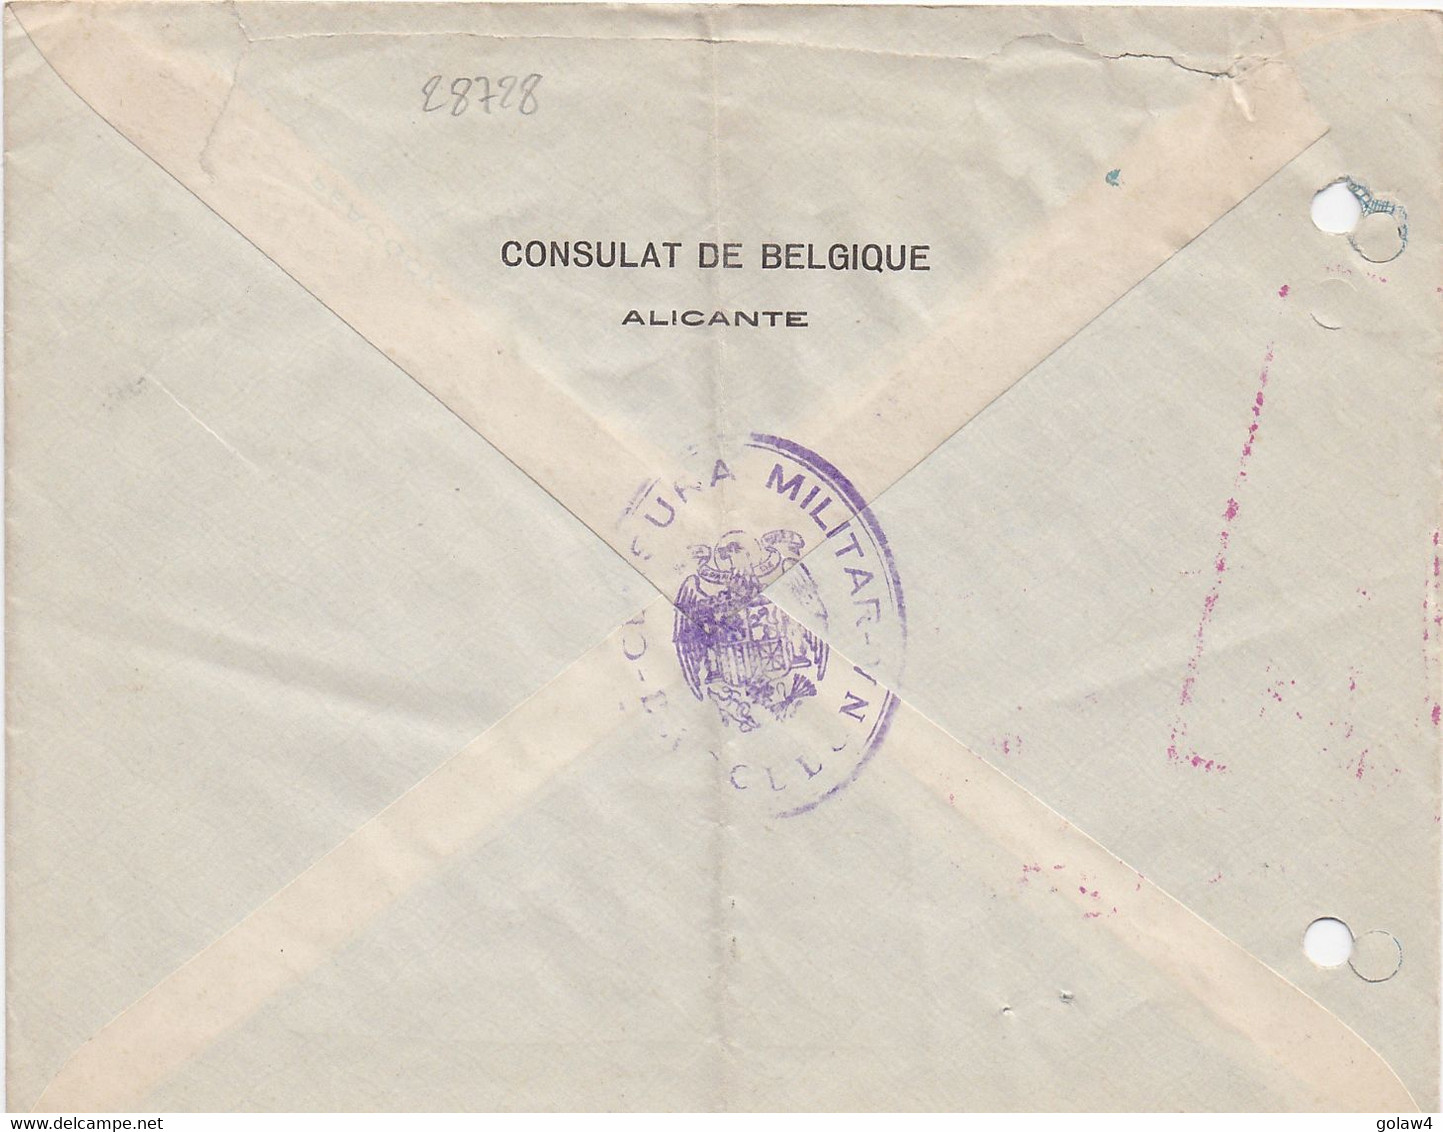 28728# FRANCO LETTRE CONSULAT DE BELGIQUE ALICANTE CENSURE BARCELONE CENSURA MILITAR BARCELONA 1940 BRUXELLES - Nationalists Censor Marks